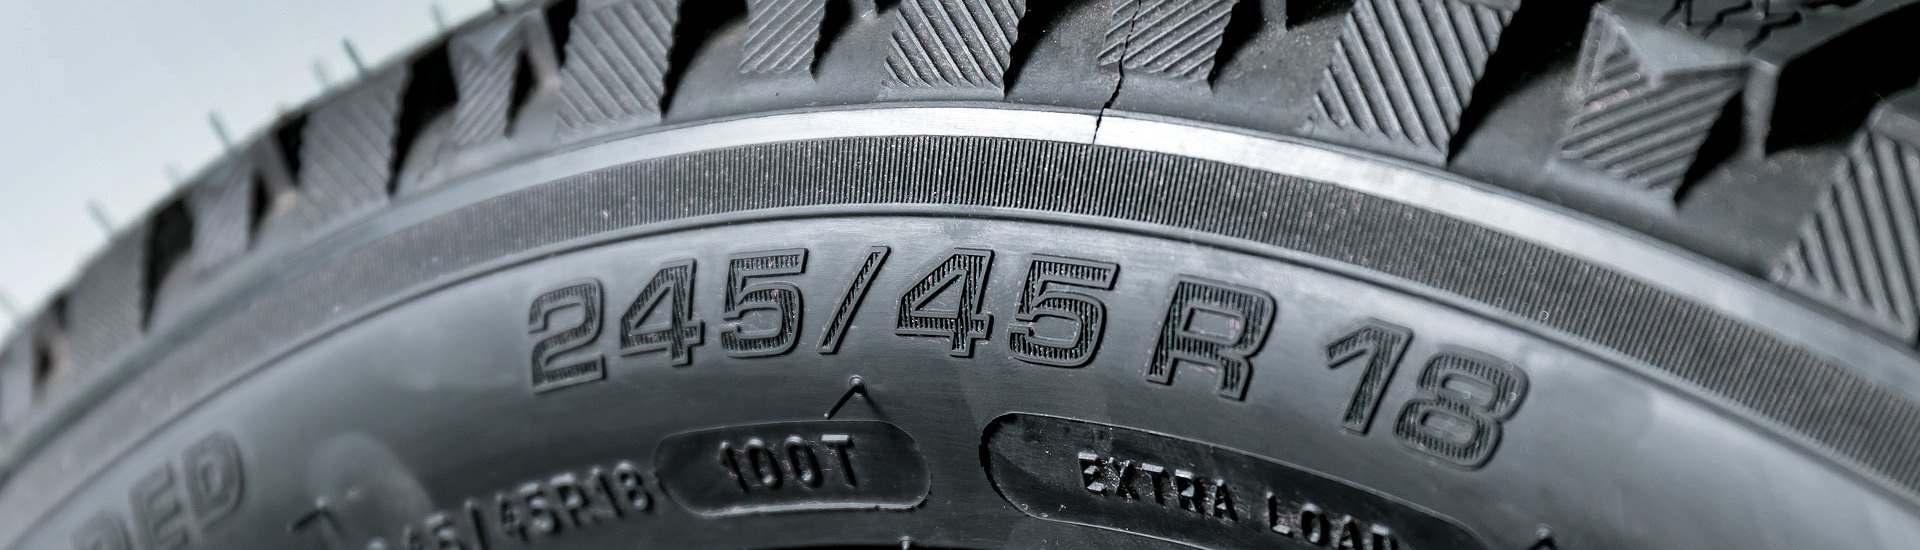 Replacing Your Original Factory Tires 101